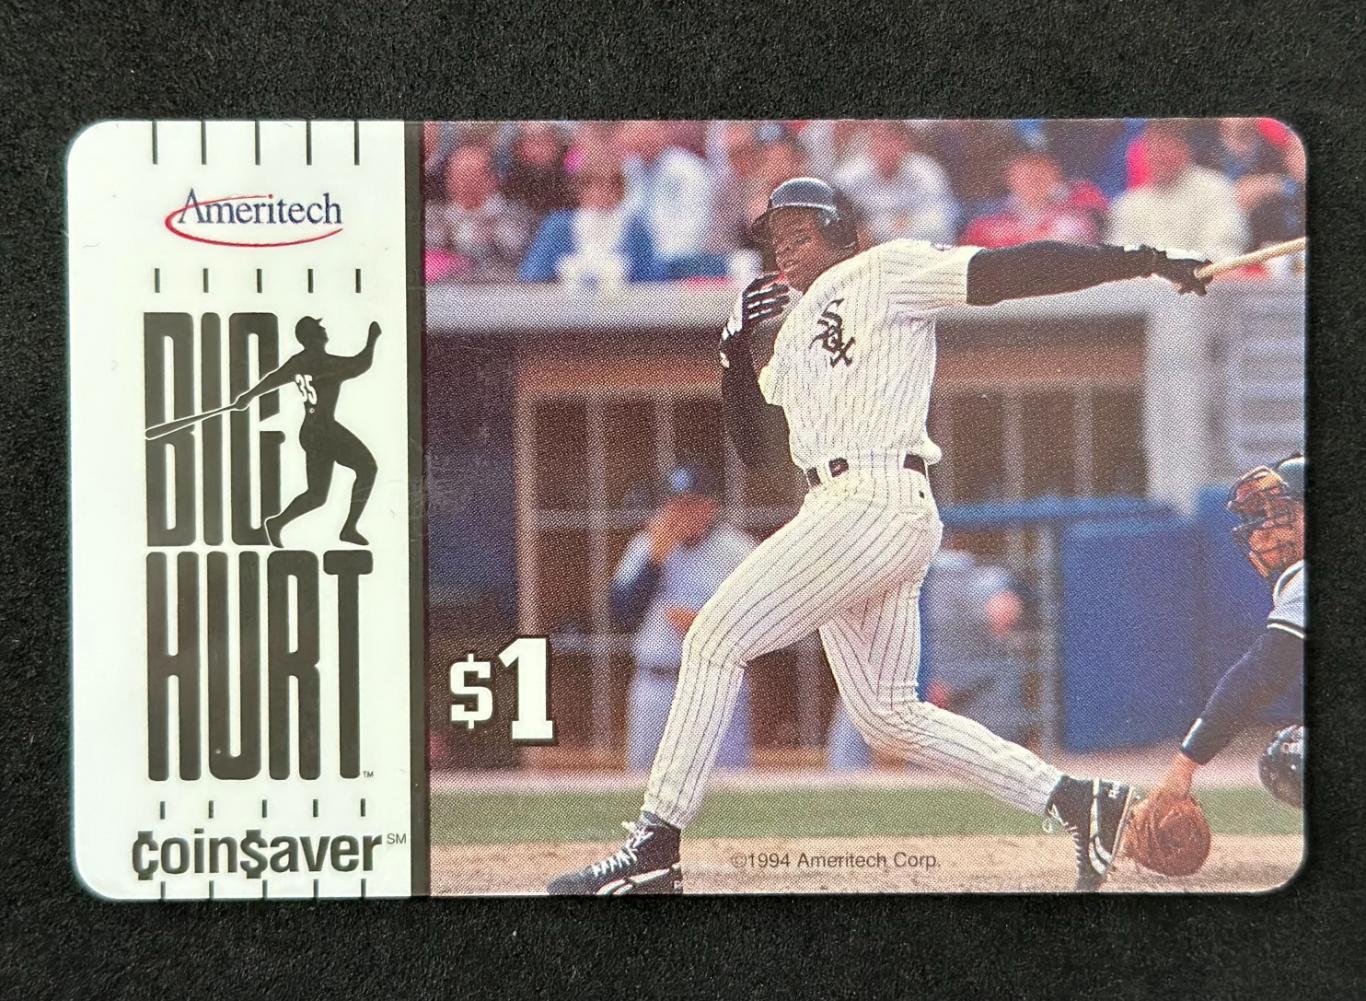 MLB Телефонная карта 1994 Ameritech CoinSaver $1